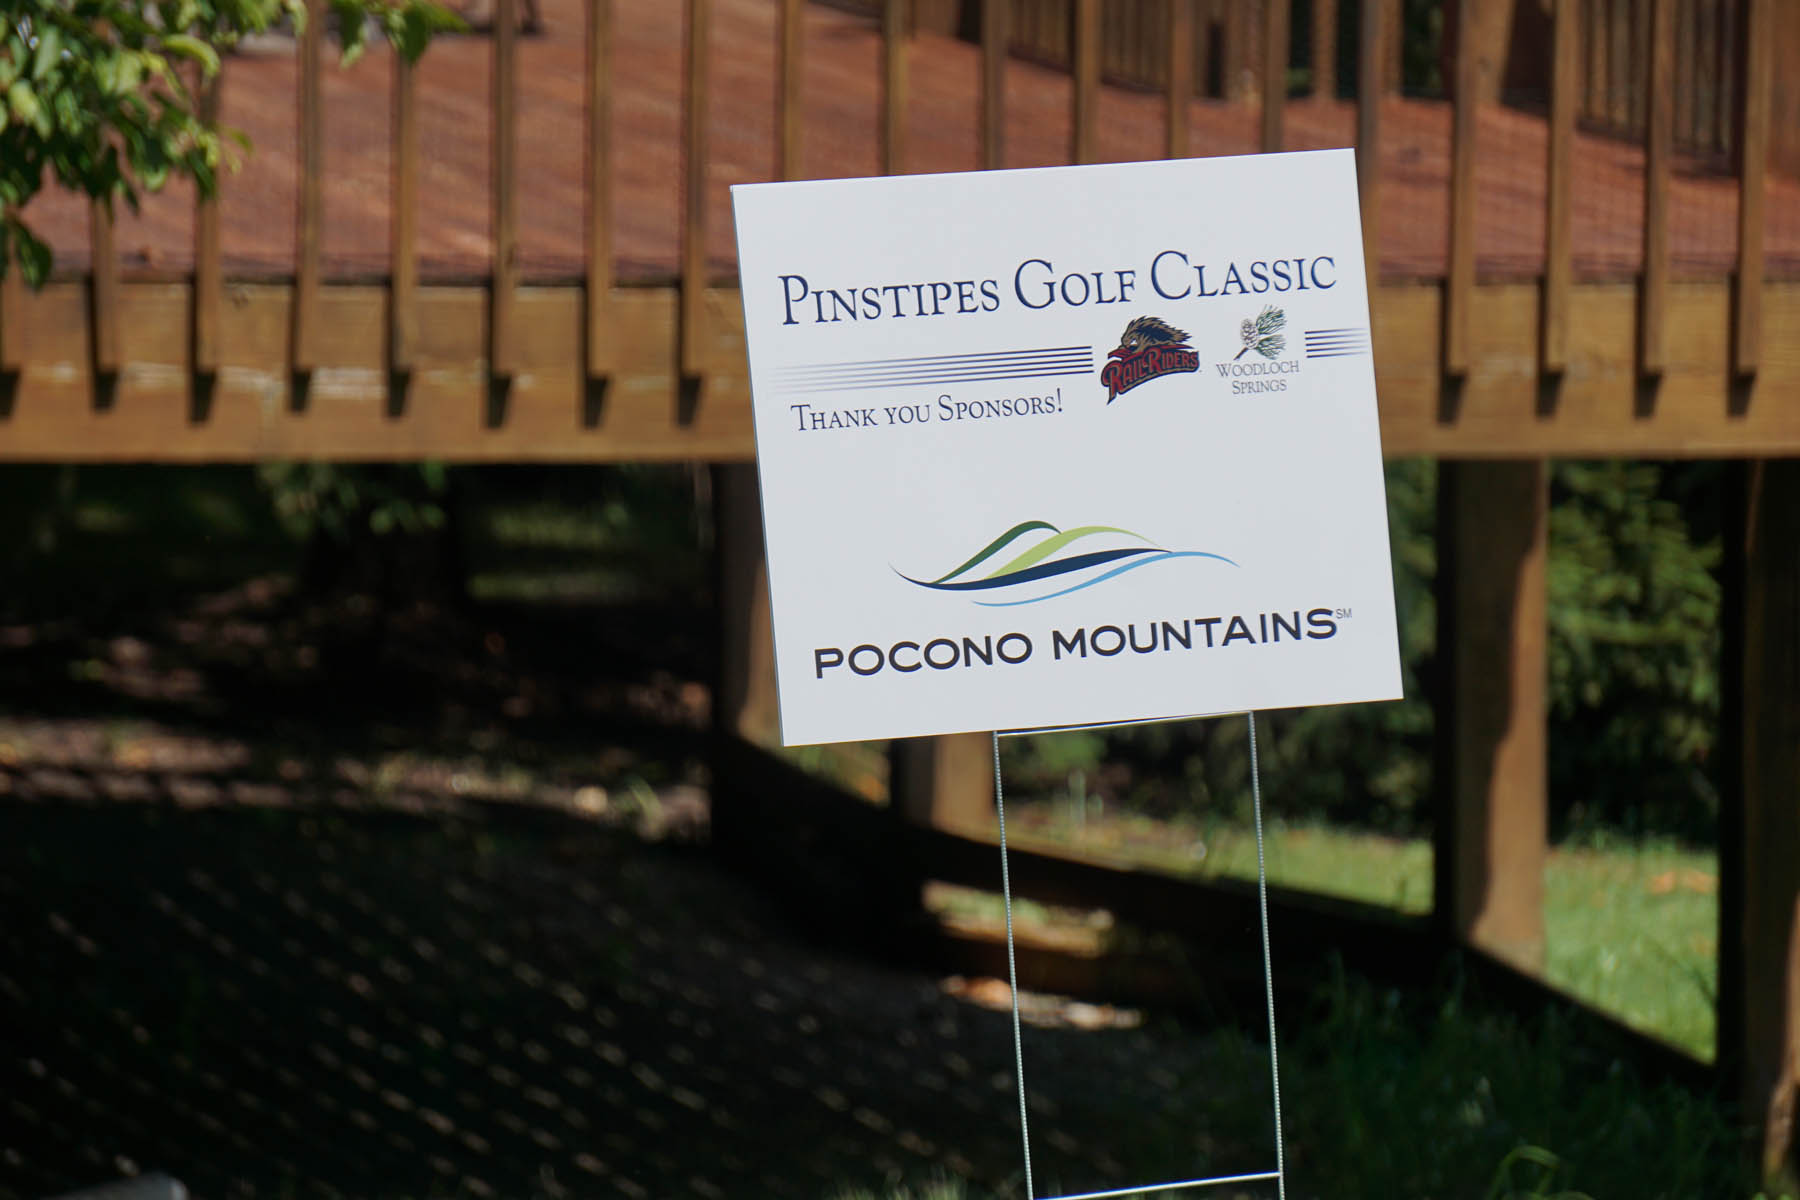 Sign text: Pinstripes Golf Course, Thank you Sponsors! Pocono Mountains.